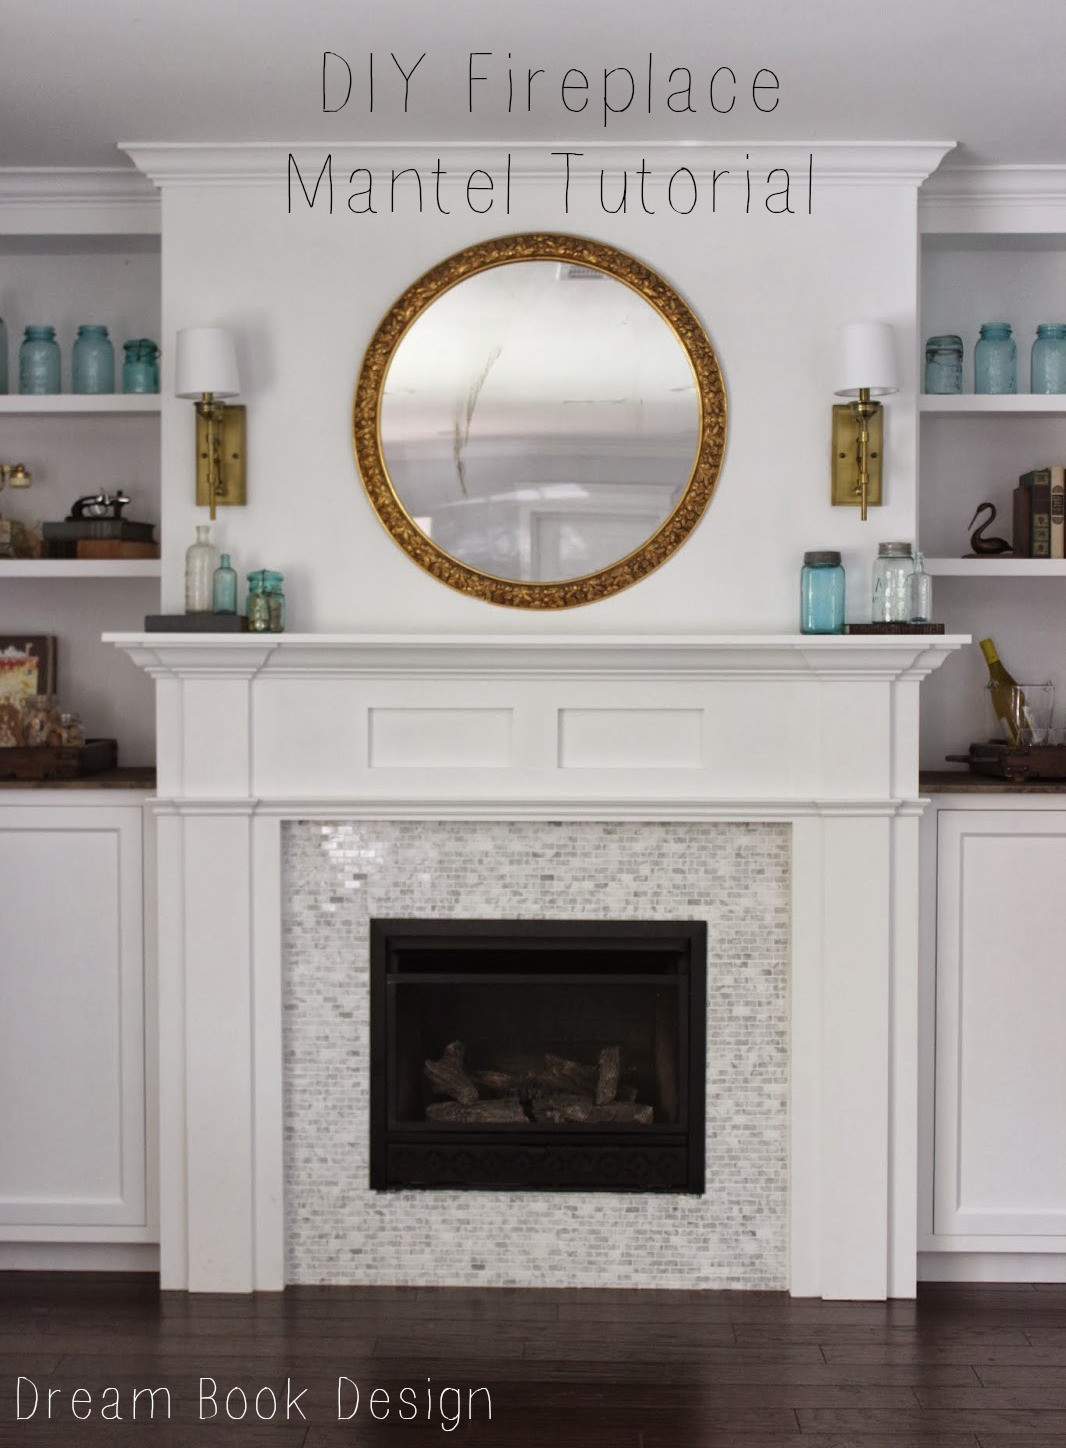 DIY Fireplace Decor
 DIY Fireplace Mantel Tutorial Dream Book Design